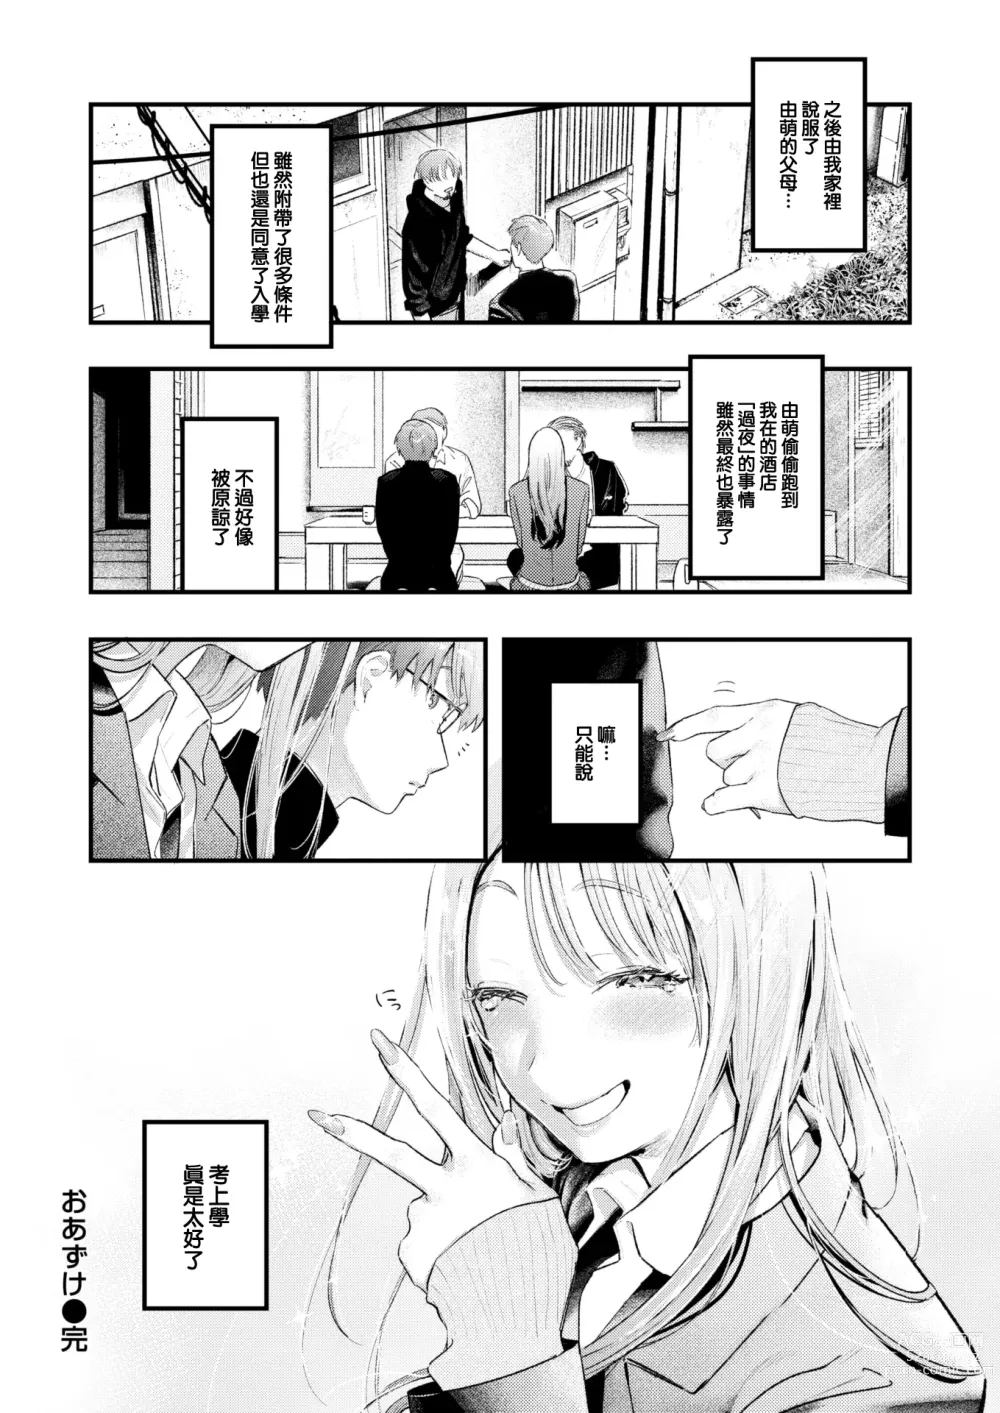 Page 25 of manga Oazuke - The hidden emotions.